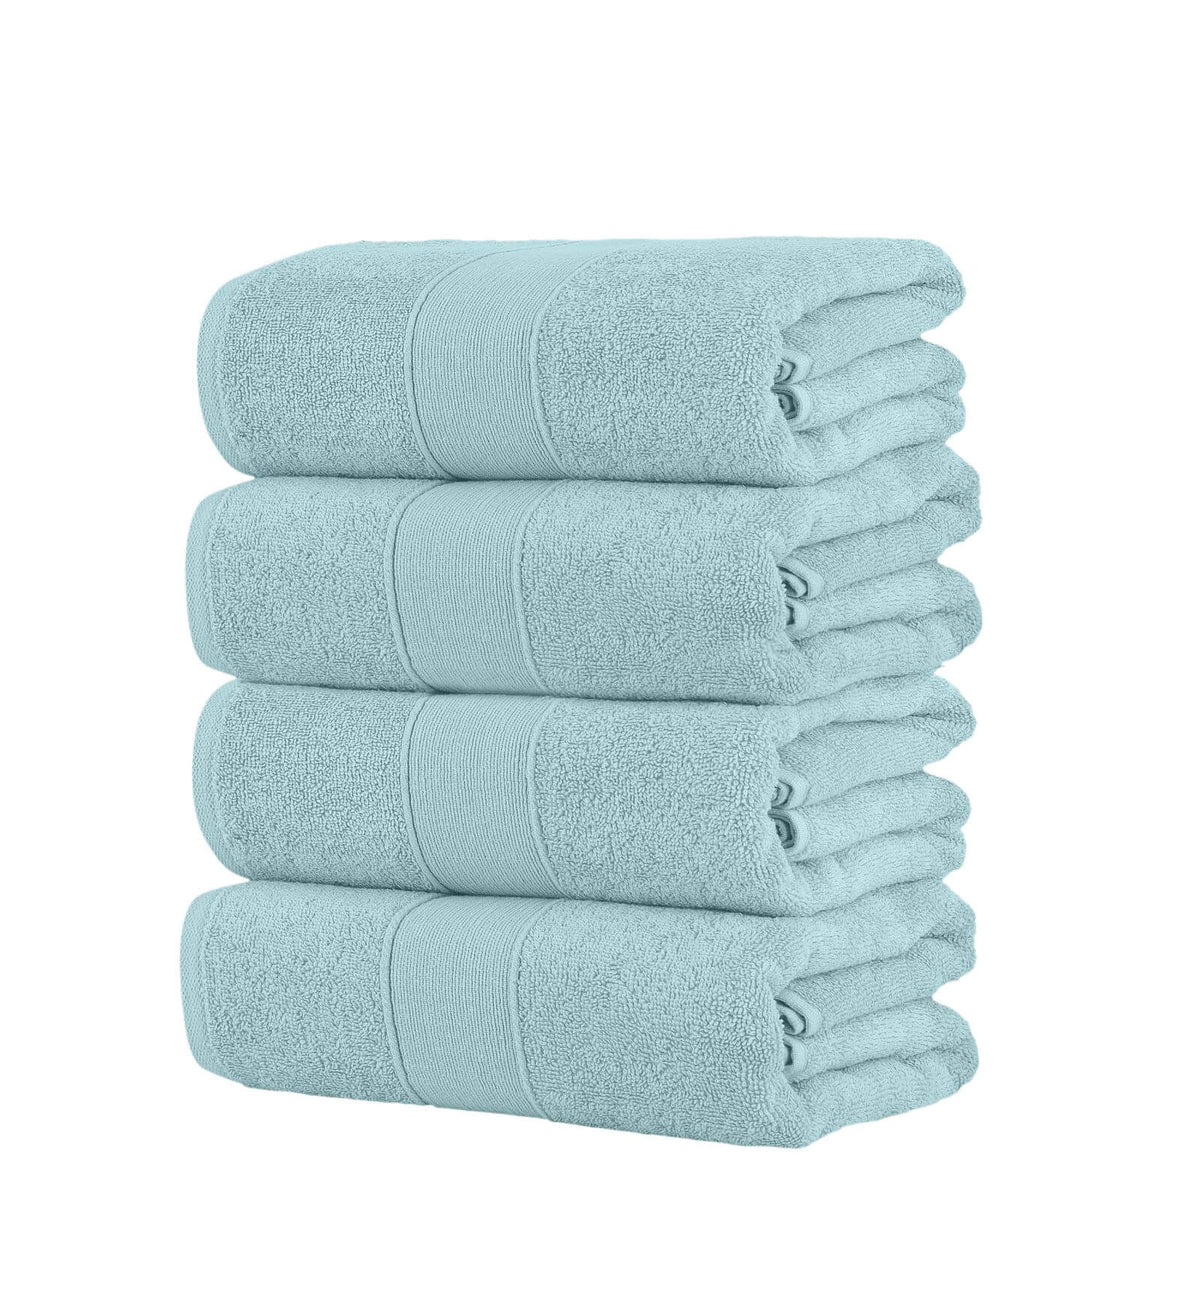 Chic Home Dobby Border Turkish Cotton 4 Piece Bath Towel Set-Blue